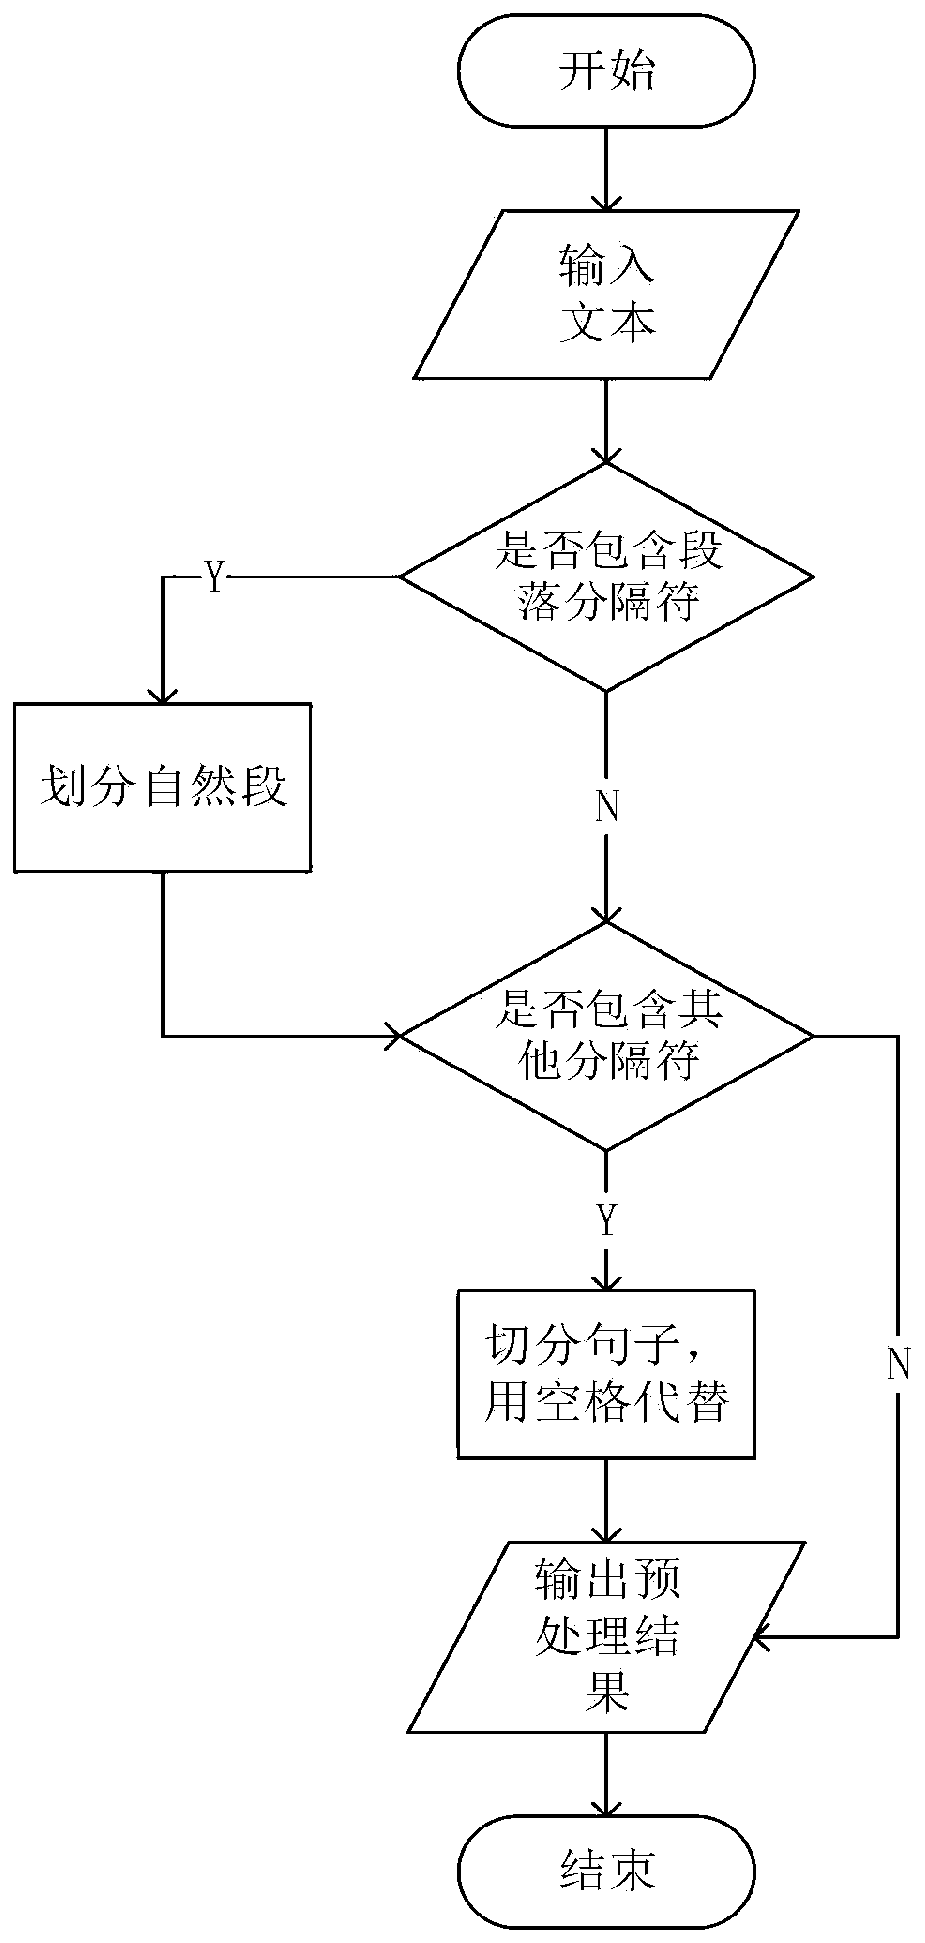 Intelligent Chinese word segmentation method based on statistics and deep learning